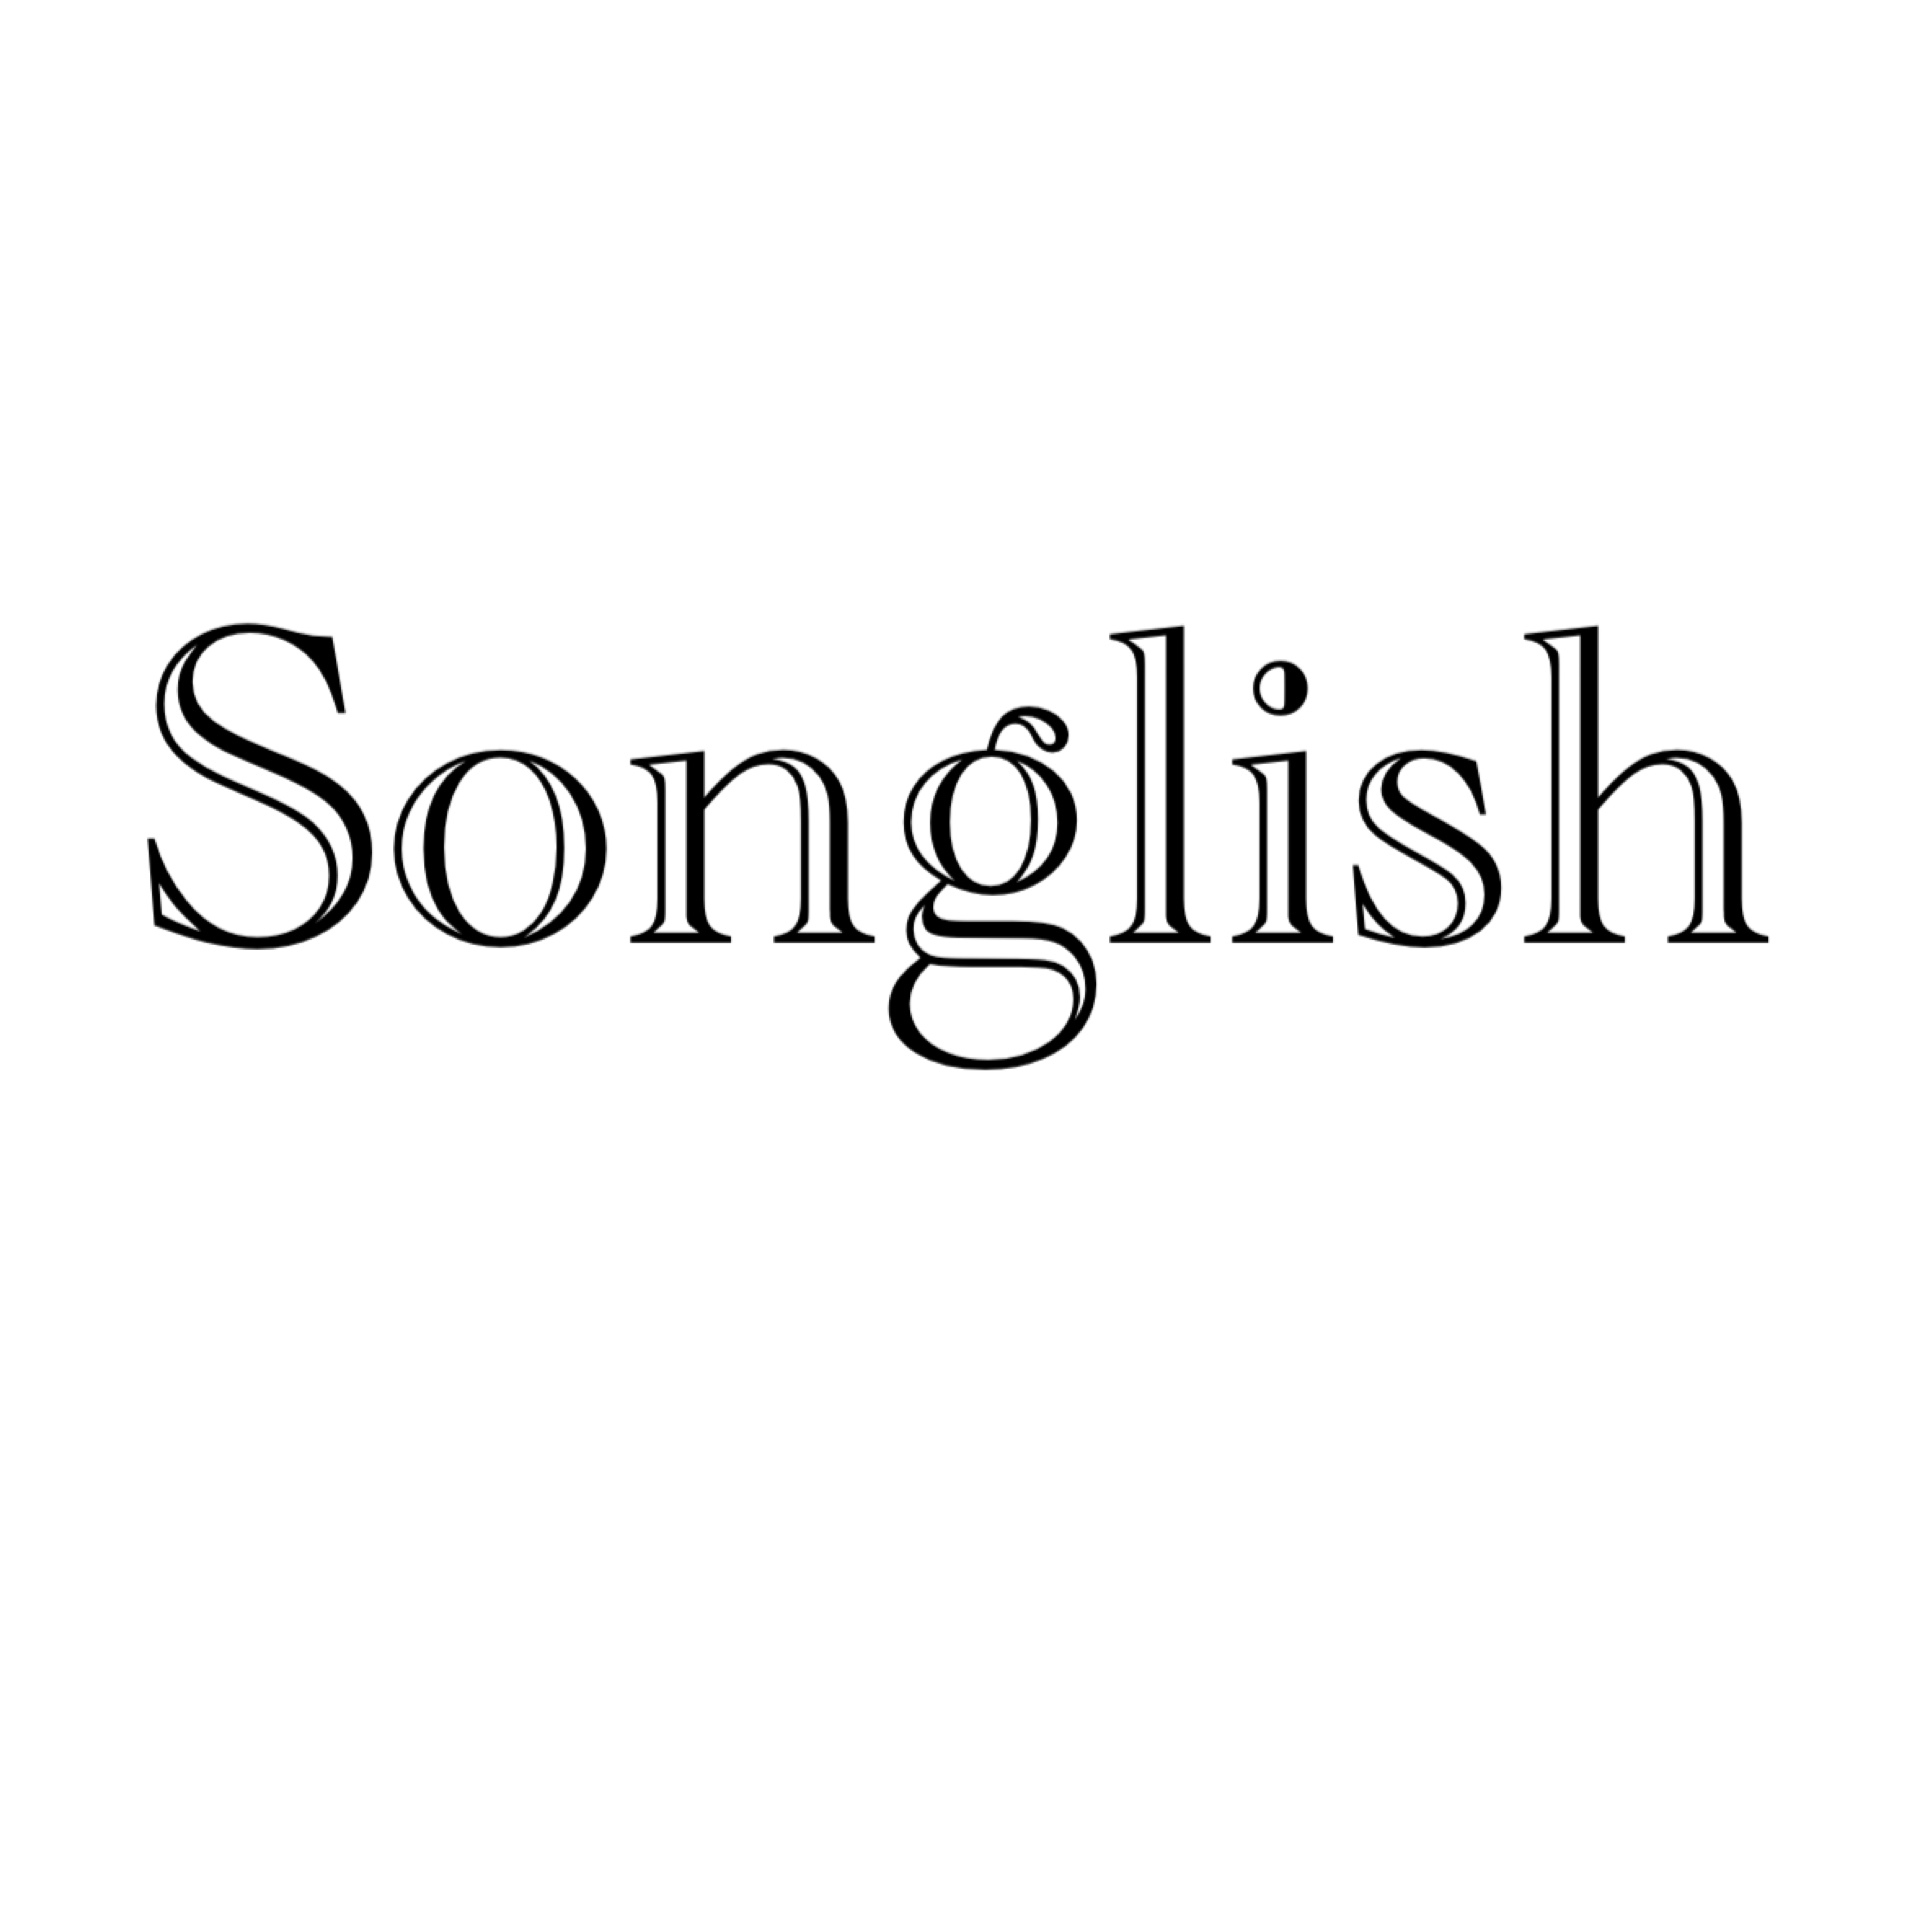 Songlish